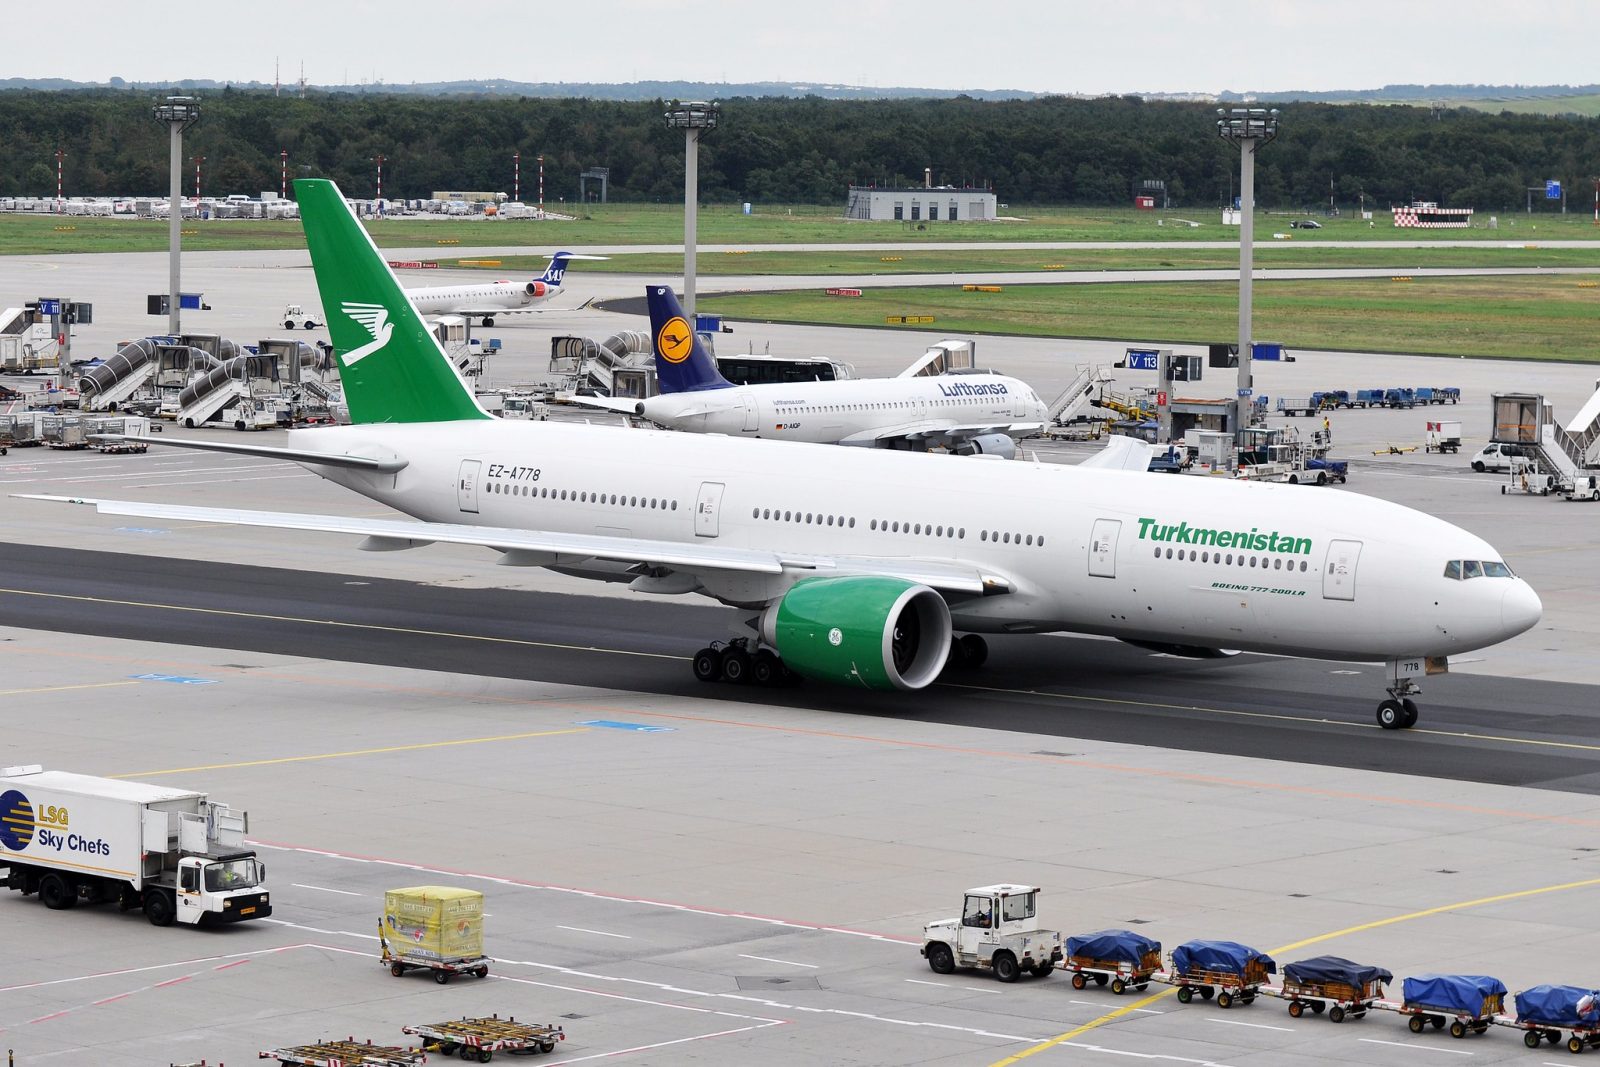 Turkmenistan Airlines